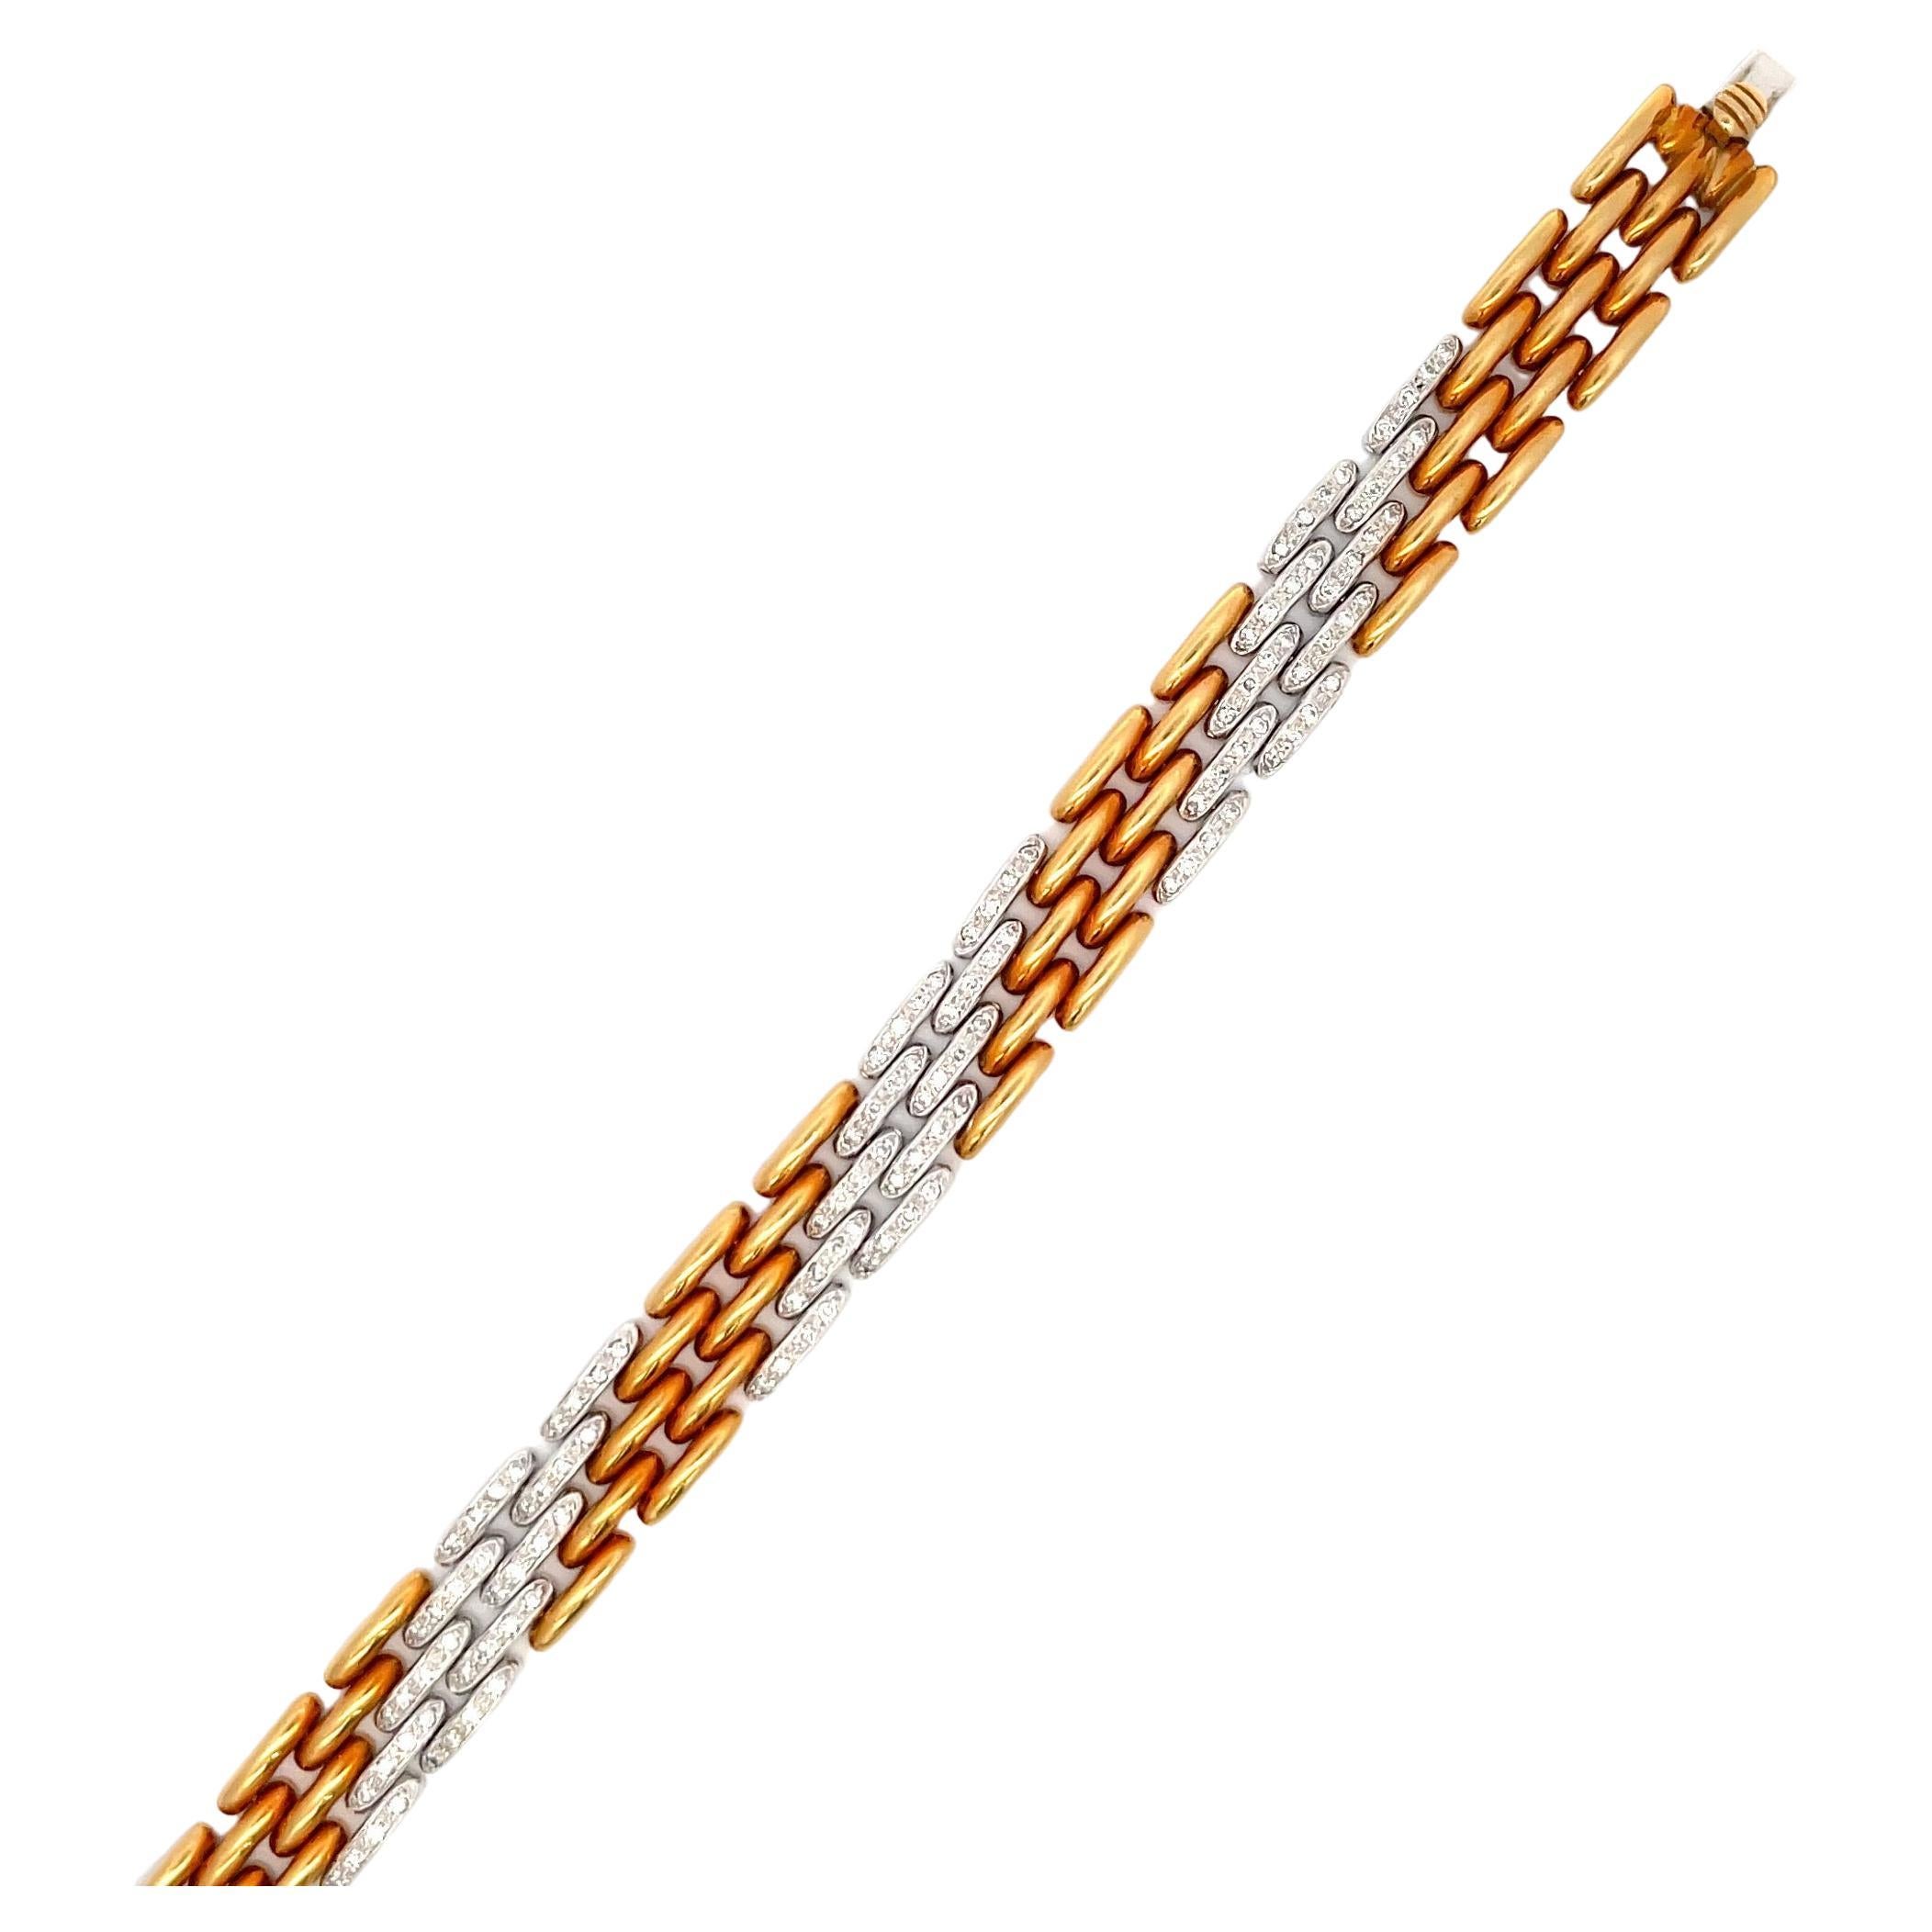 18 Karat Yellow Gold Panther motif bracelet featuring 5 rows of 18 Karat Yellow Gold and Diamond weighing 1.25 Carats, 36.1 Grams.